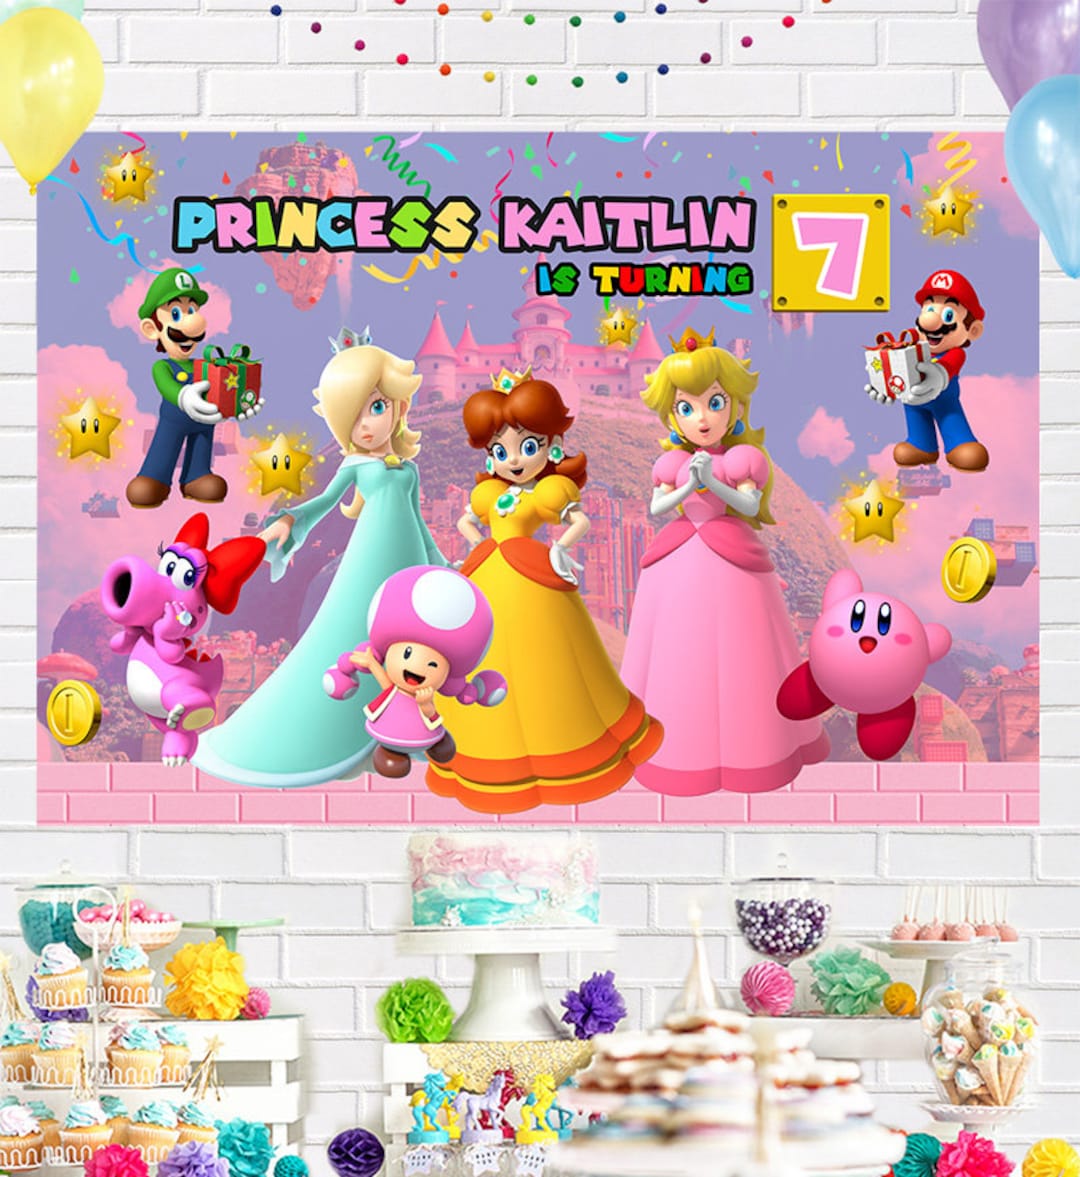 Super Mario Gold Coin Video Game Happy Birthday Theme Photography Backdrops  5x3ft Children Boys Birthday Party Decor Supplies Cake Table Decor Kids